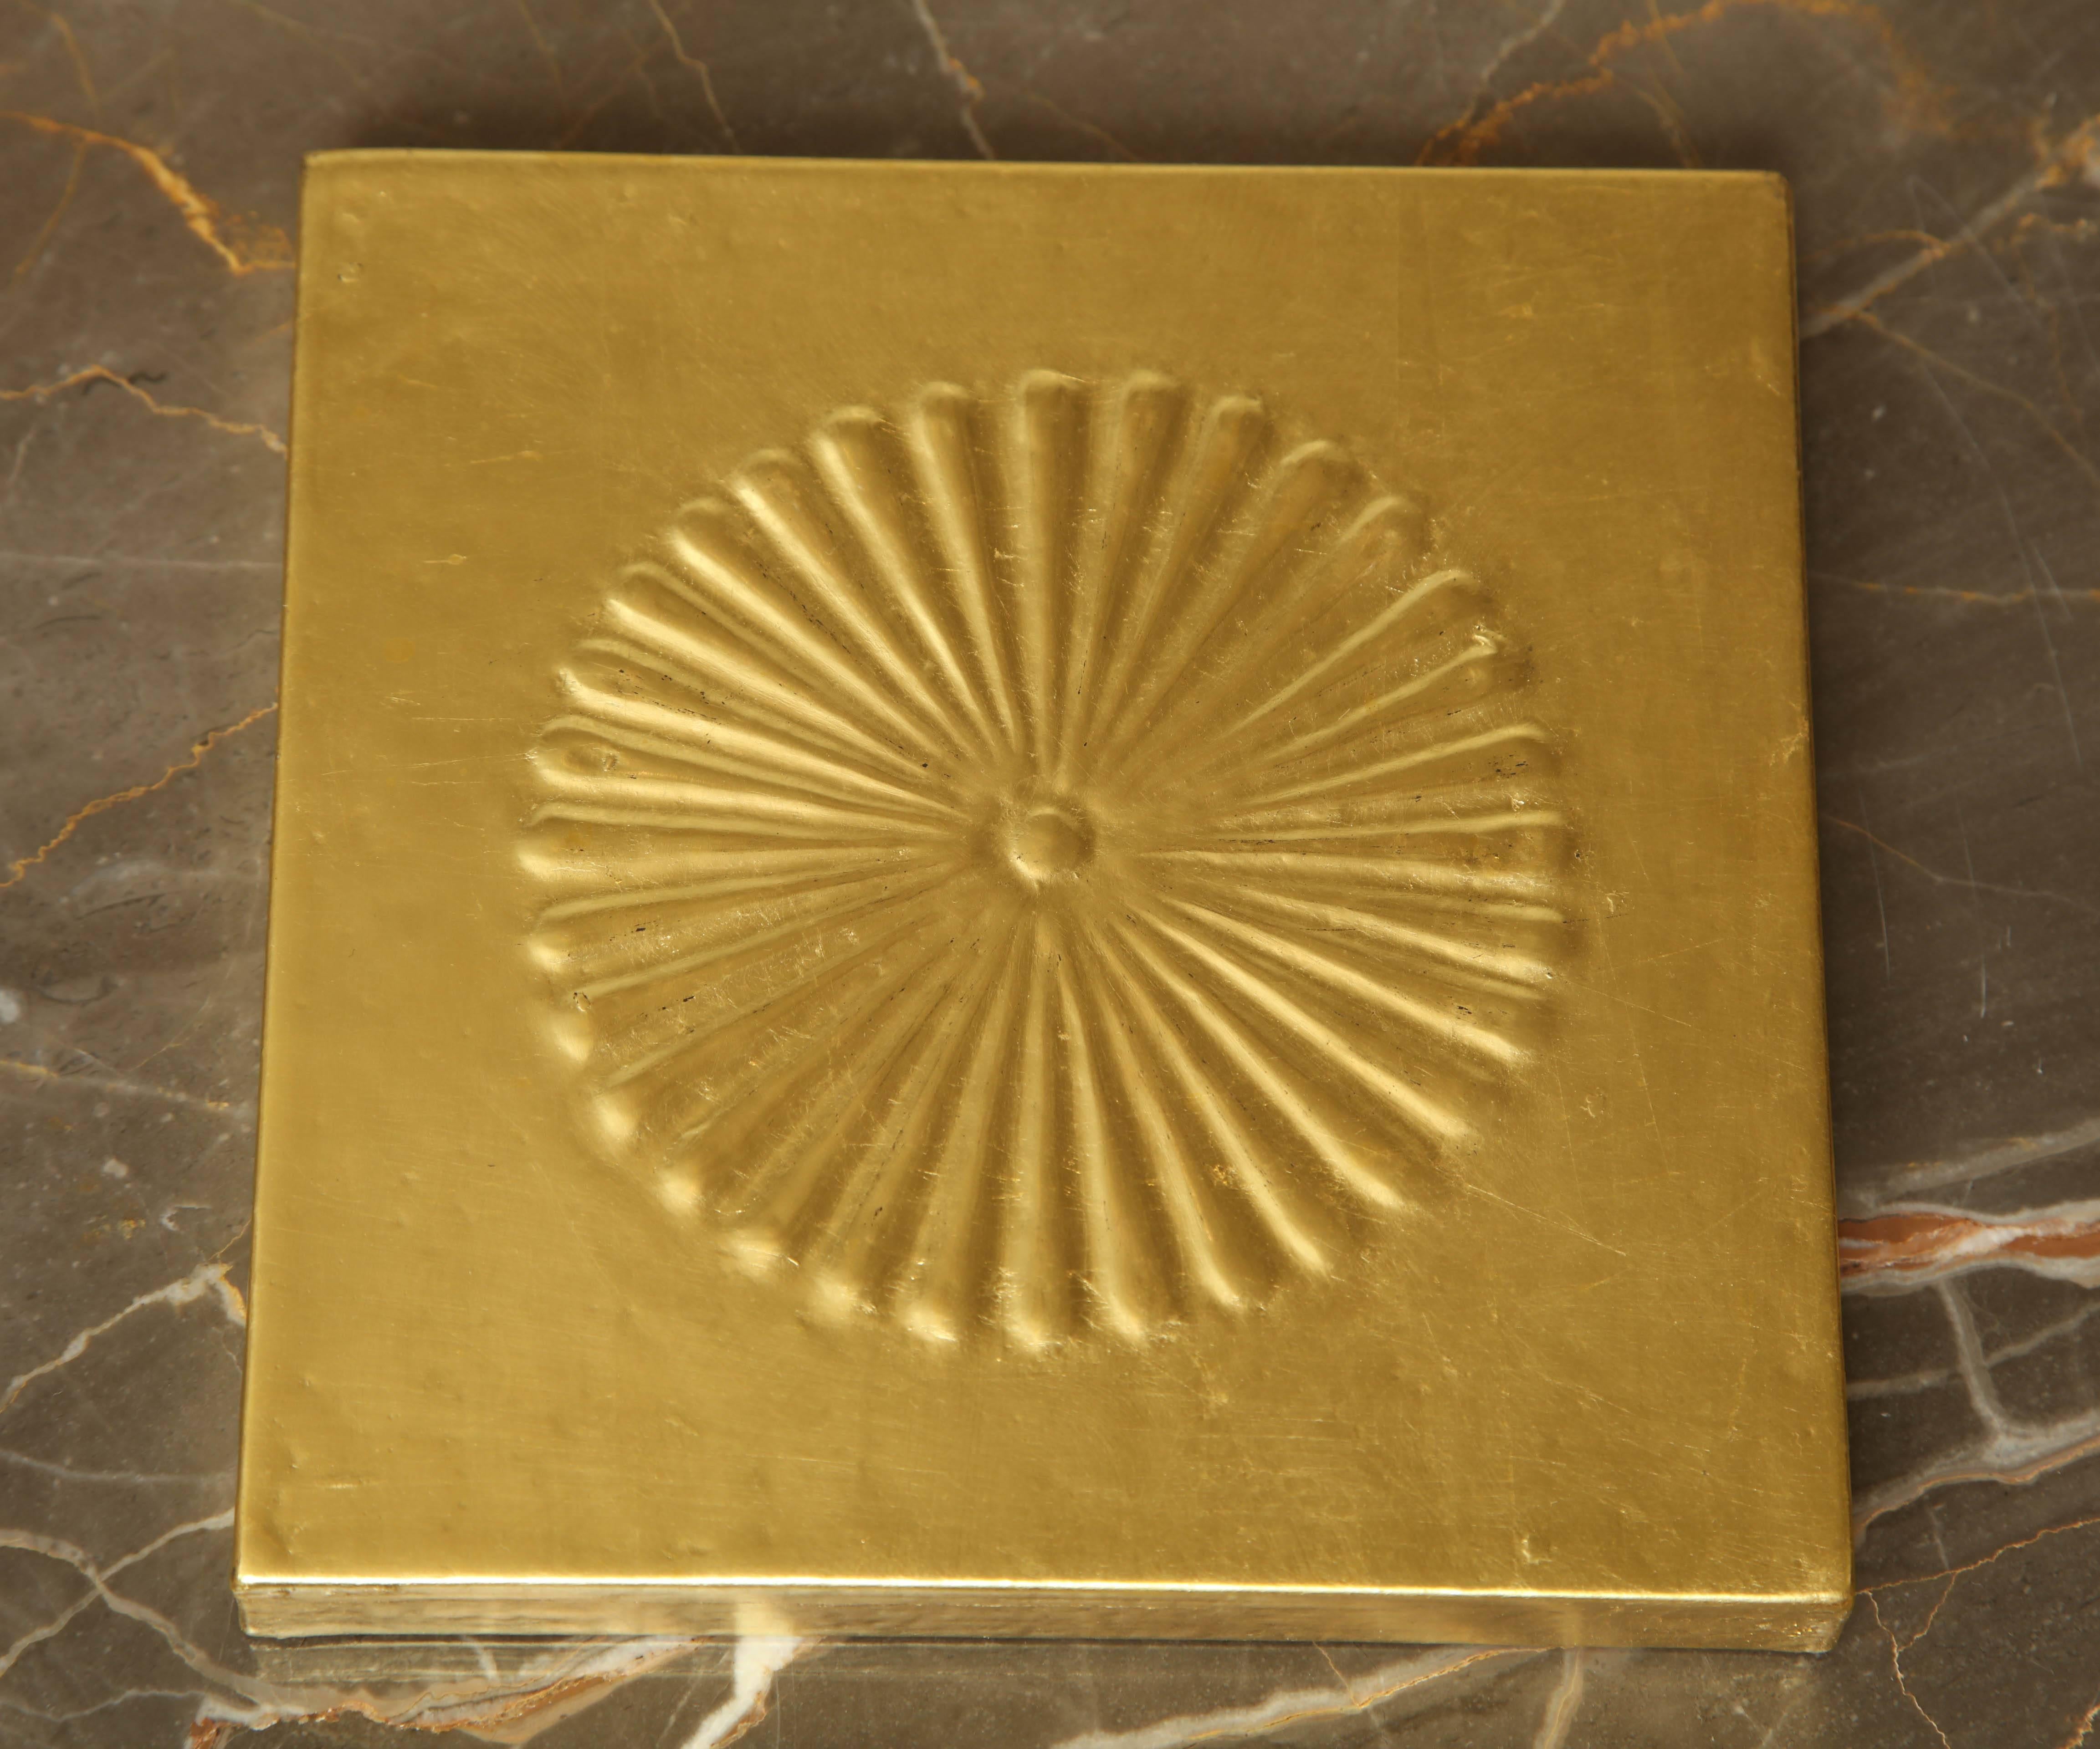 23-karat gold gilded panel with raised gesso Chrysanthemum motif. 

Piece measures at 6